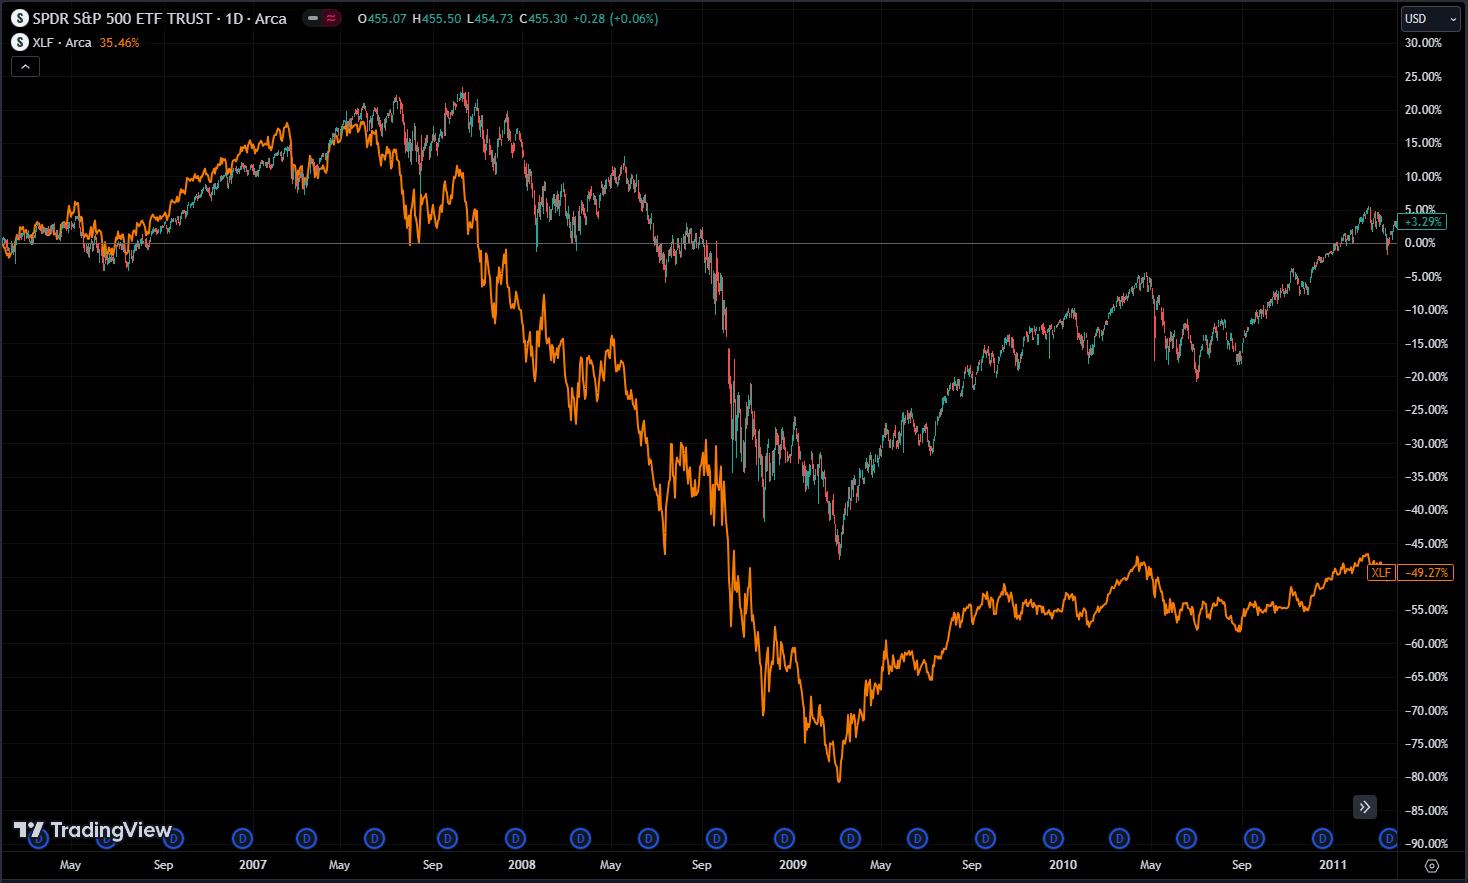 2008 financial market crash, SPY & XLF comparison 